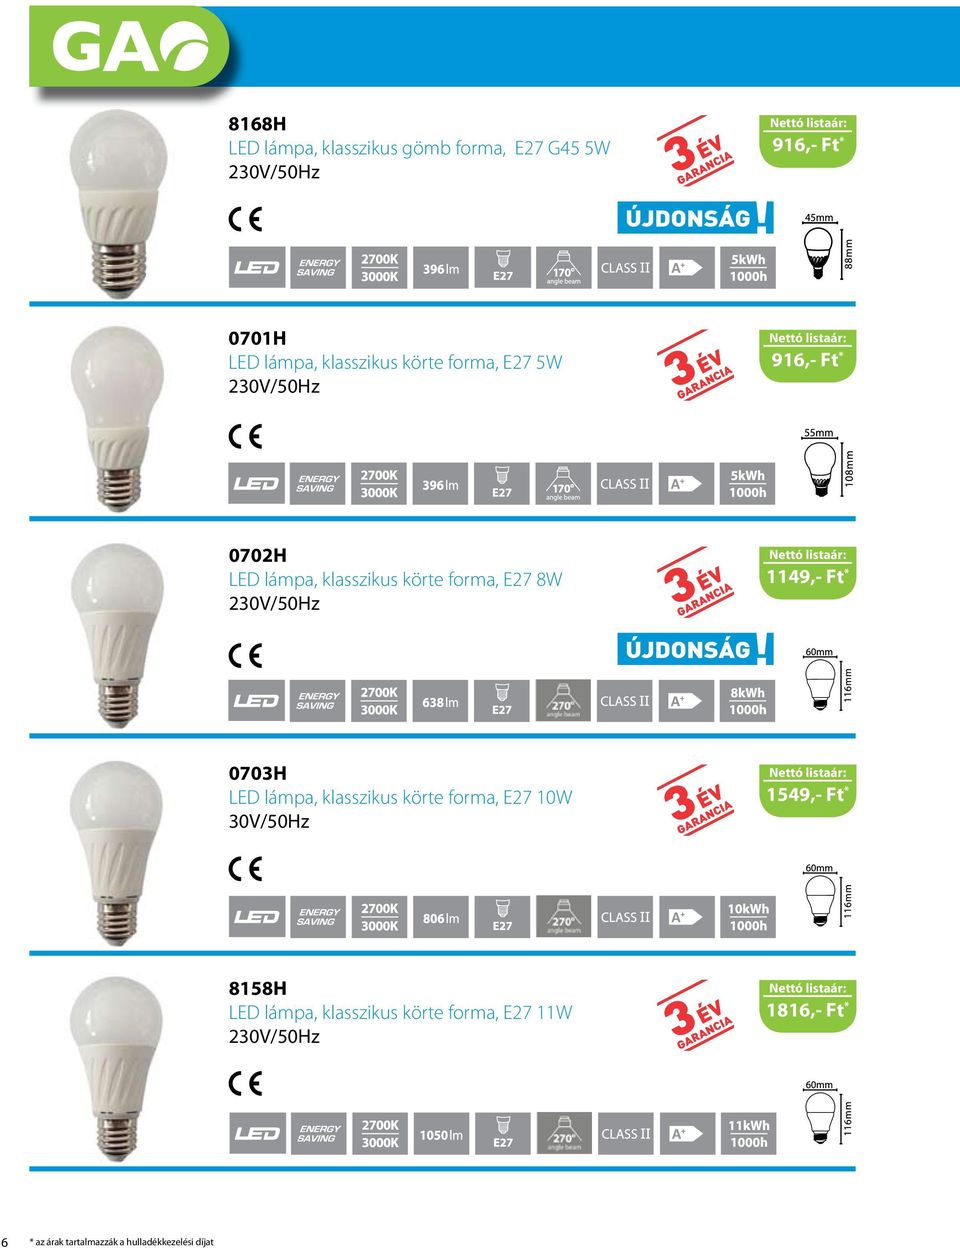 0703H LED lámpa, klasszikus körte forma, E27 10W 30V/50Hz 1549,- Ft * 8158H LED lámpa,